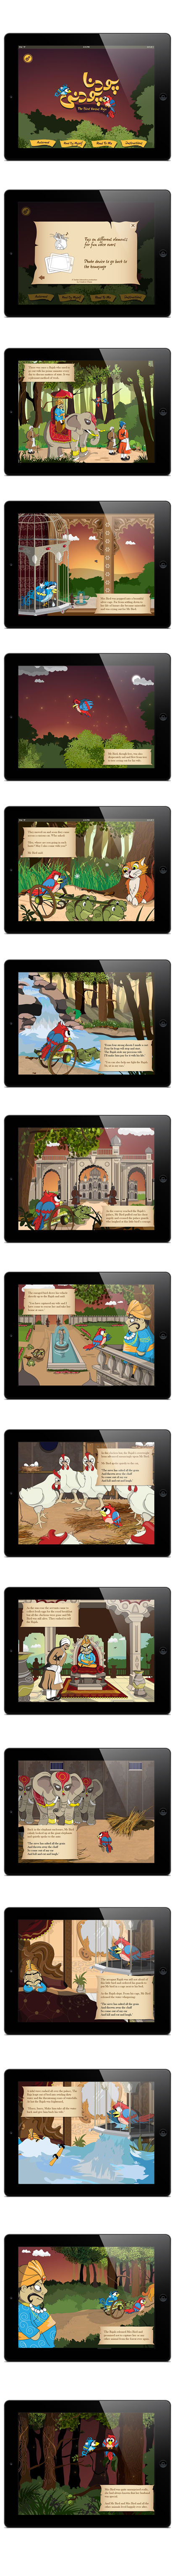 iPad app children e-book Character design